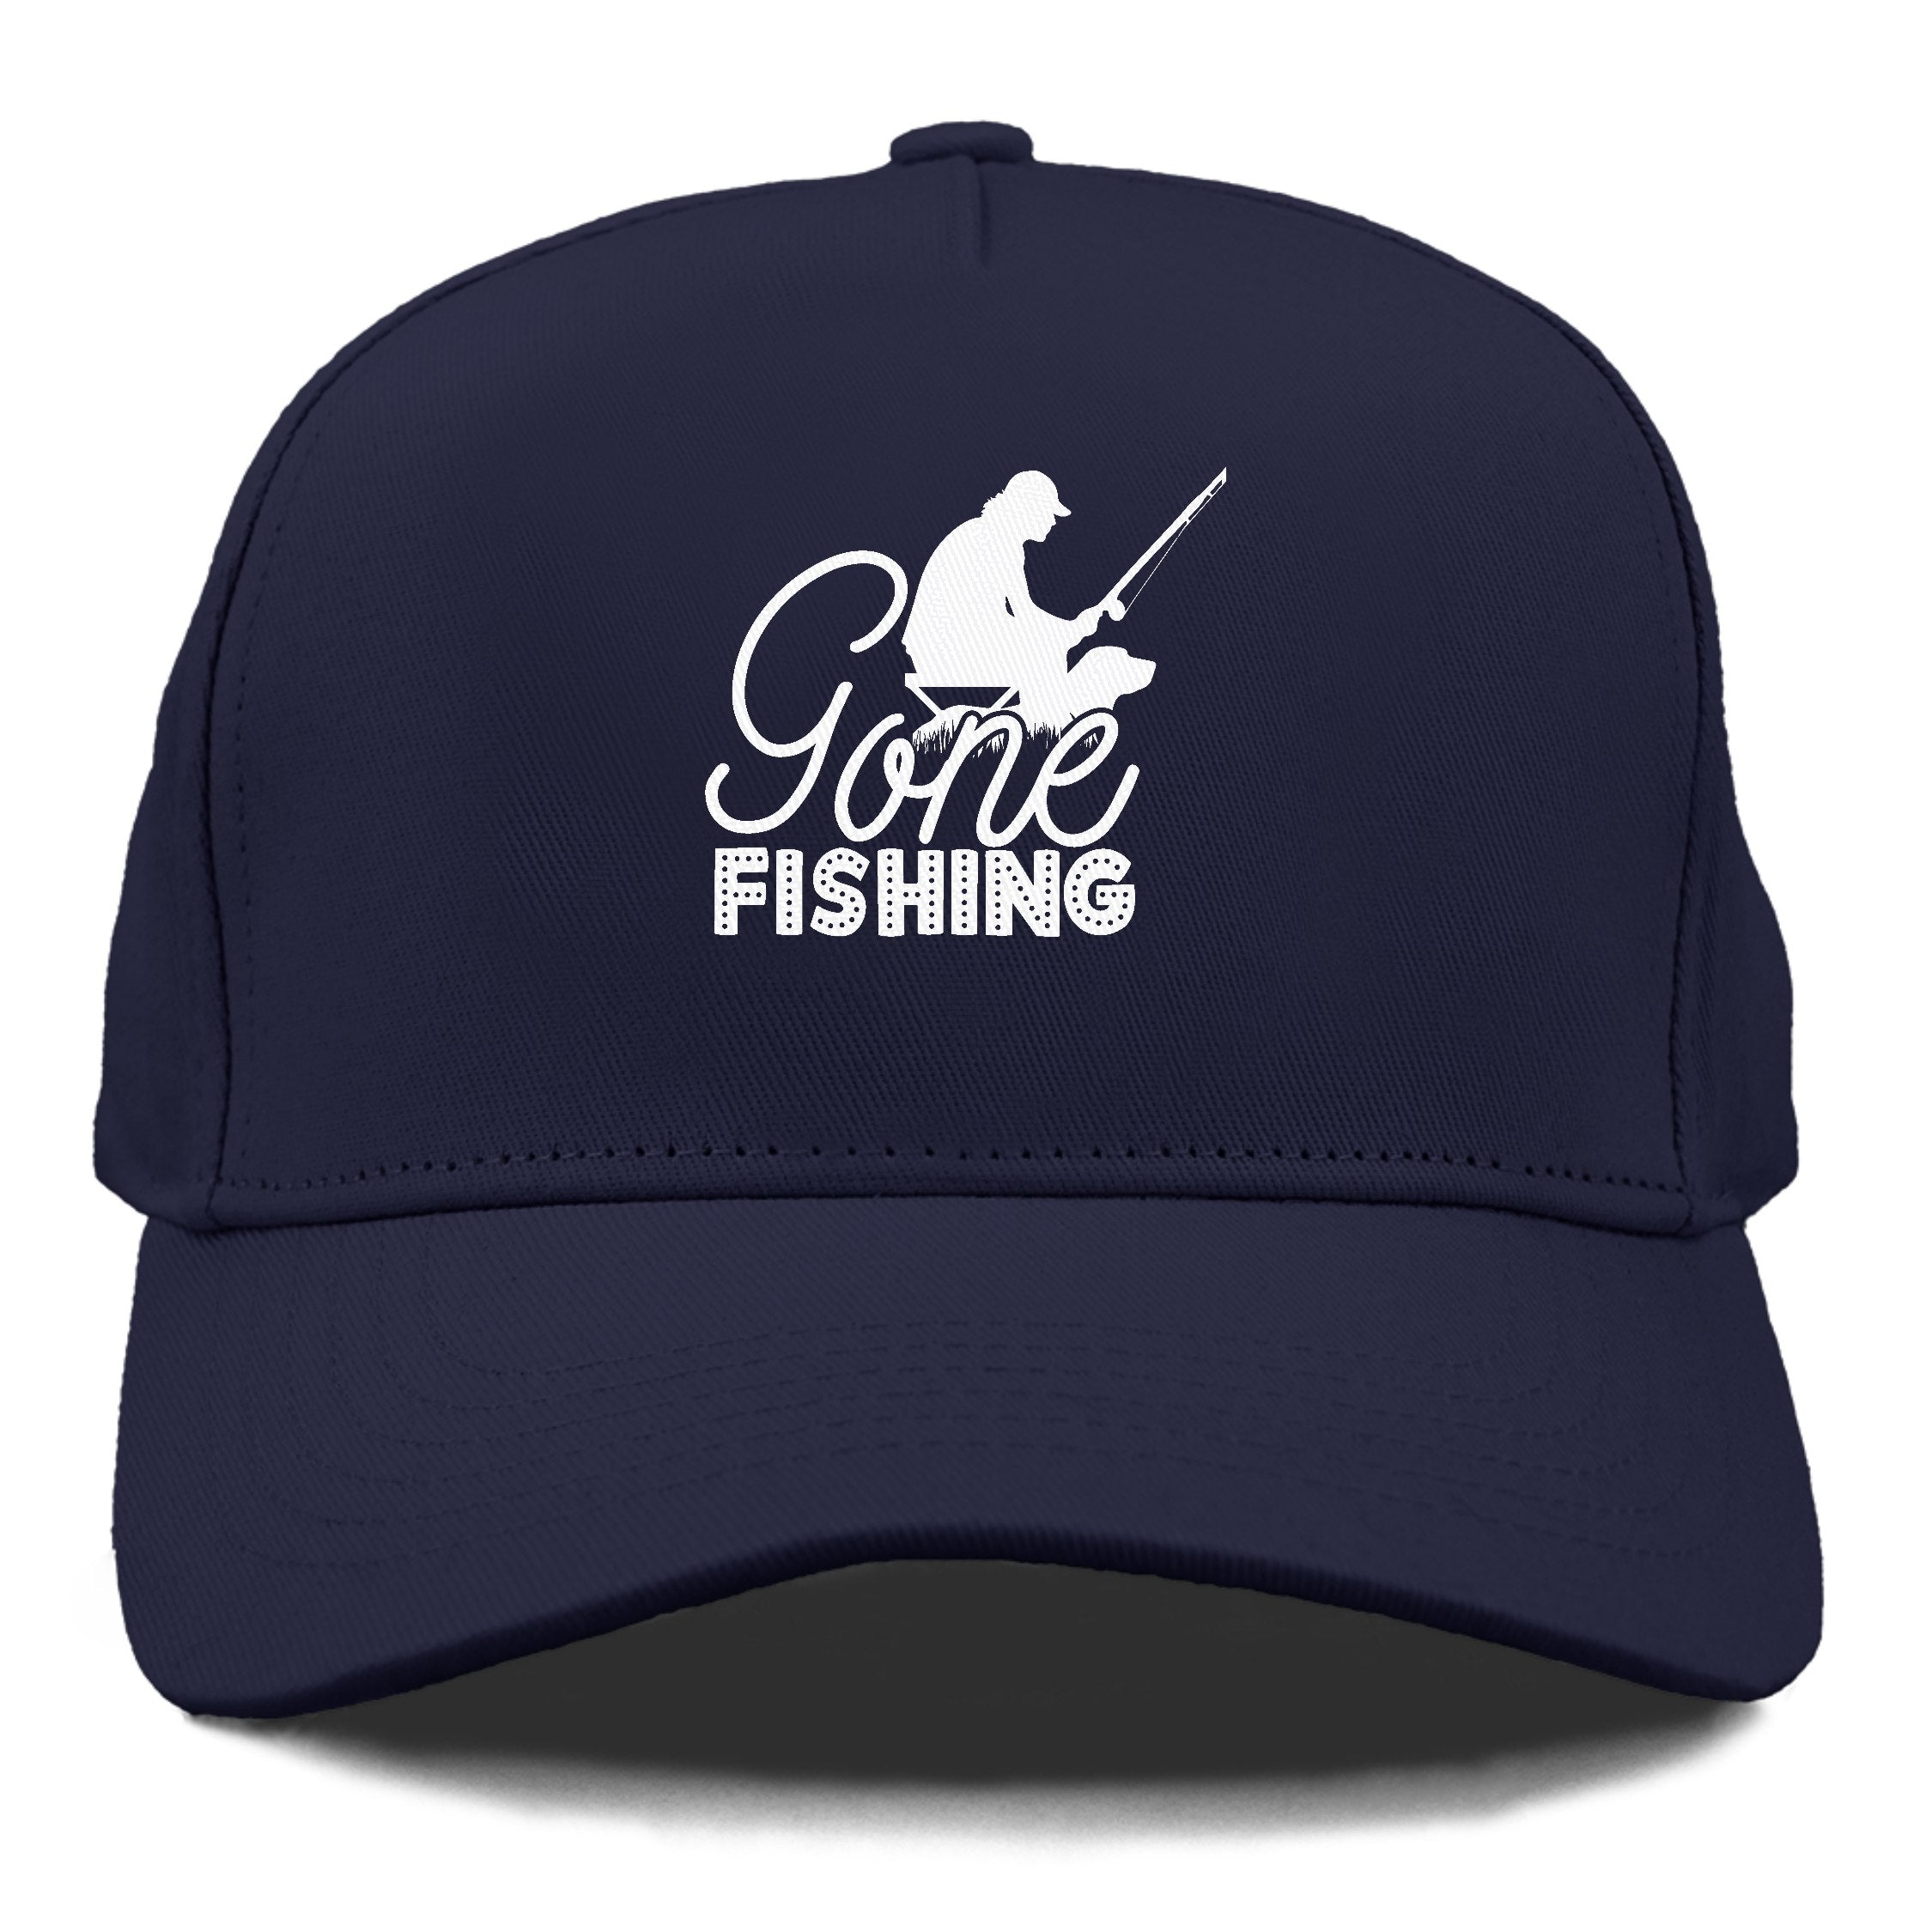 Gone Fishing Cap Navy